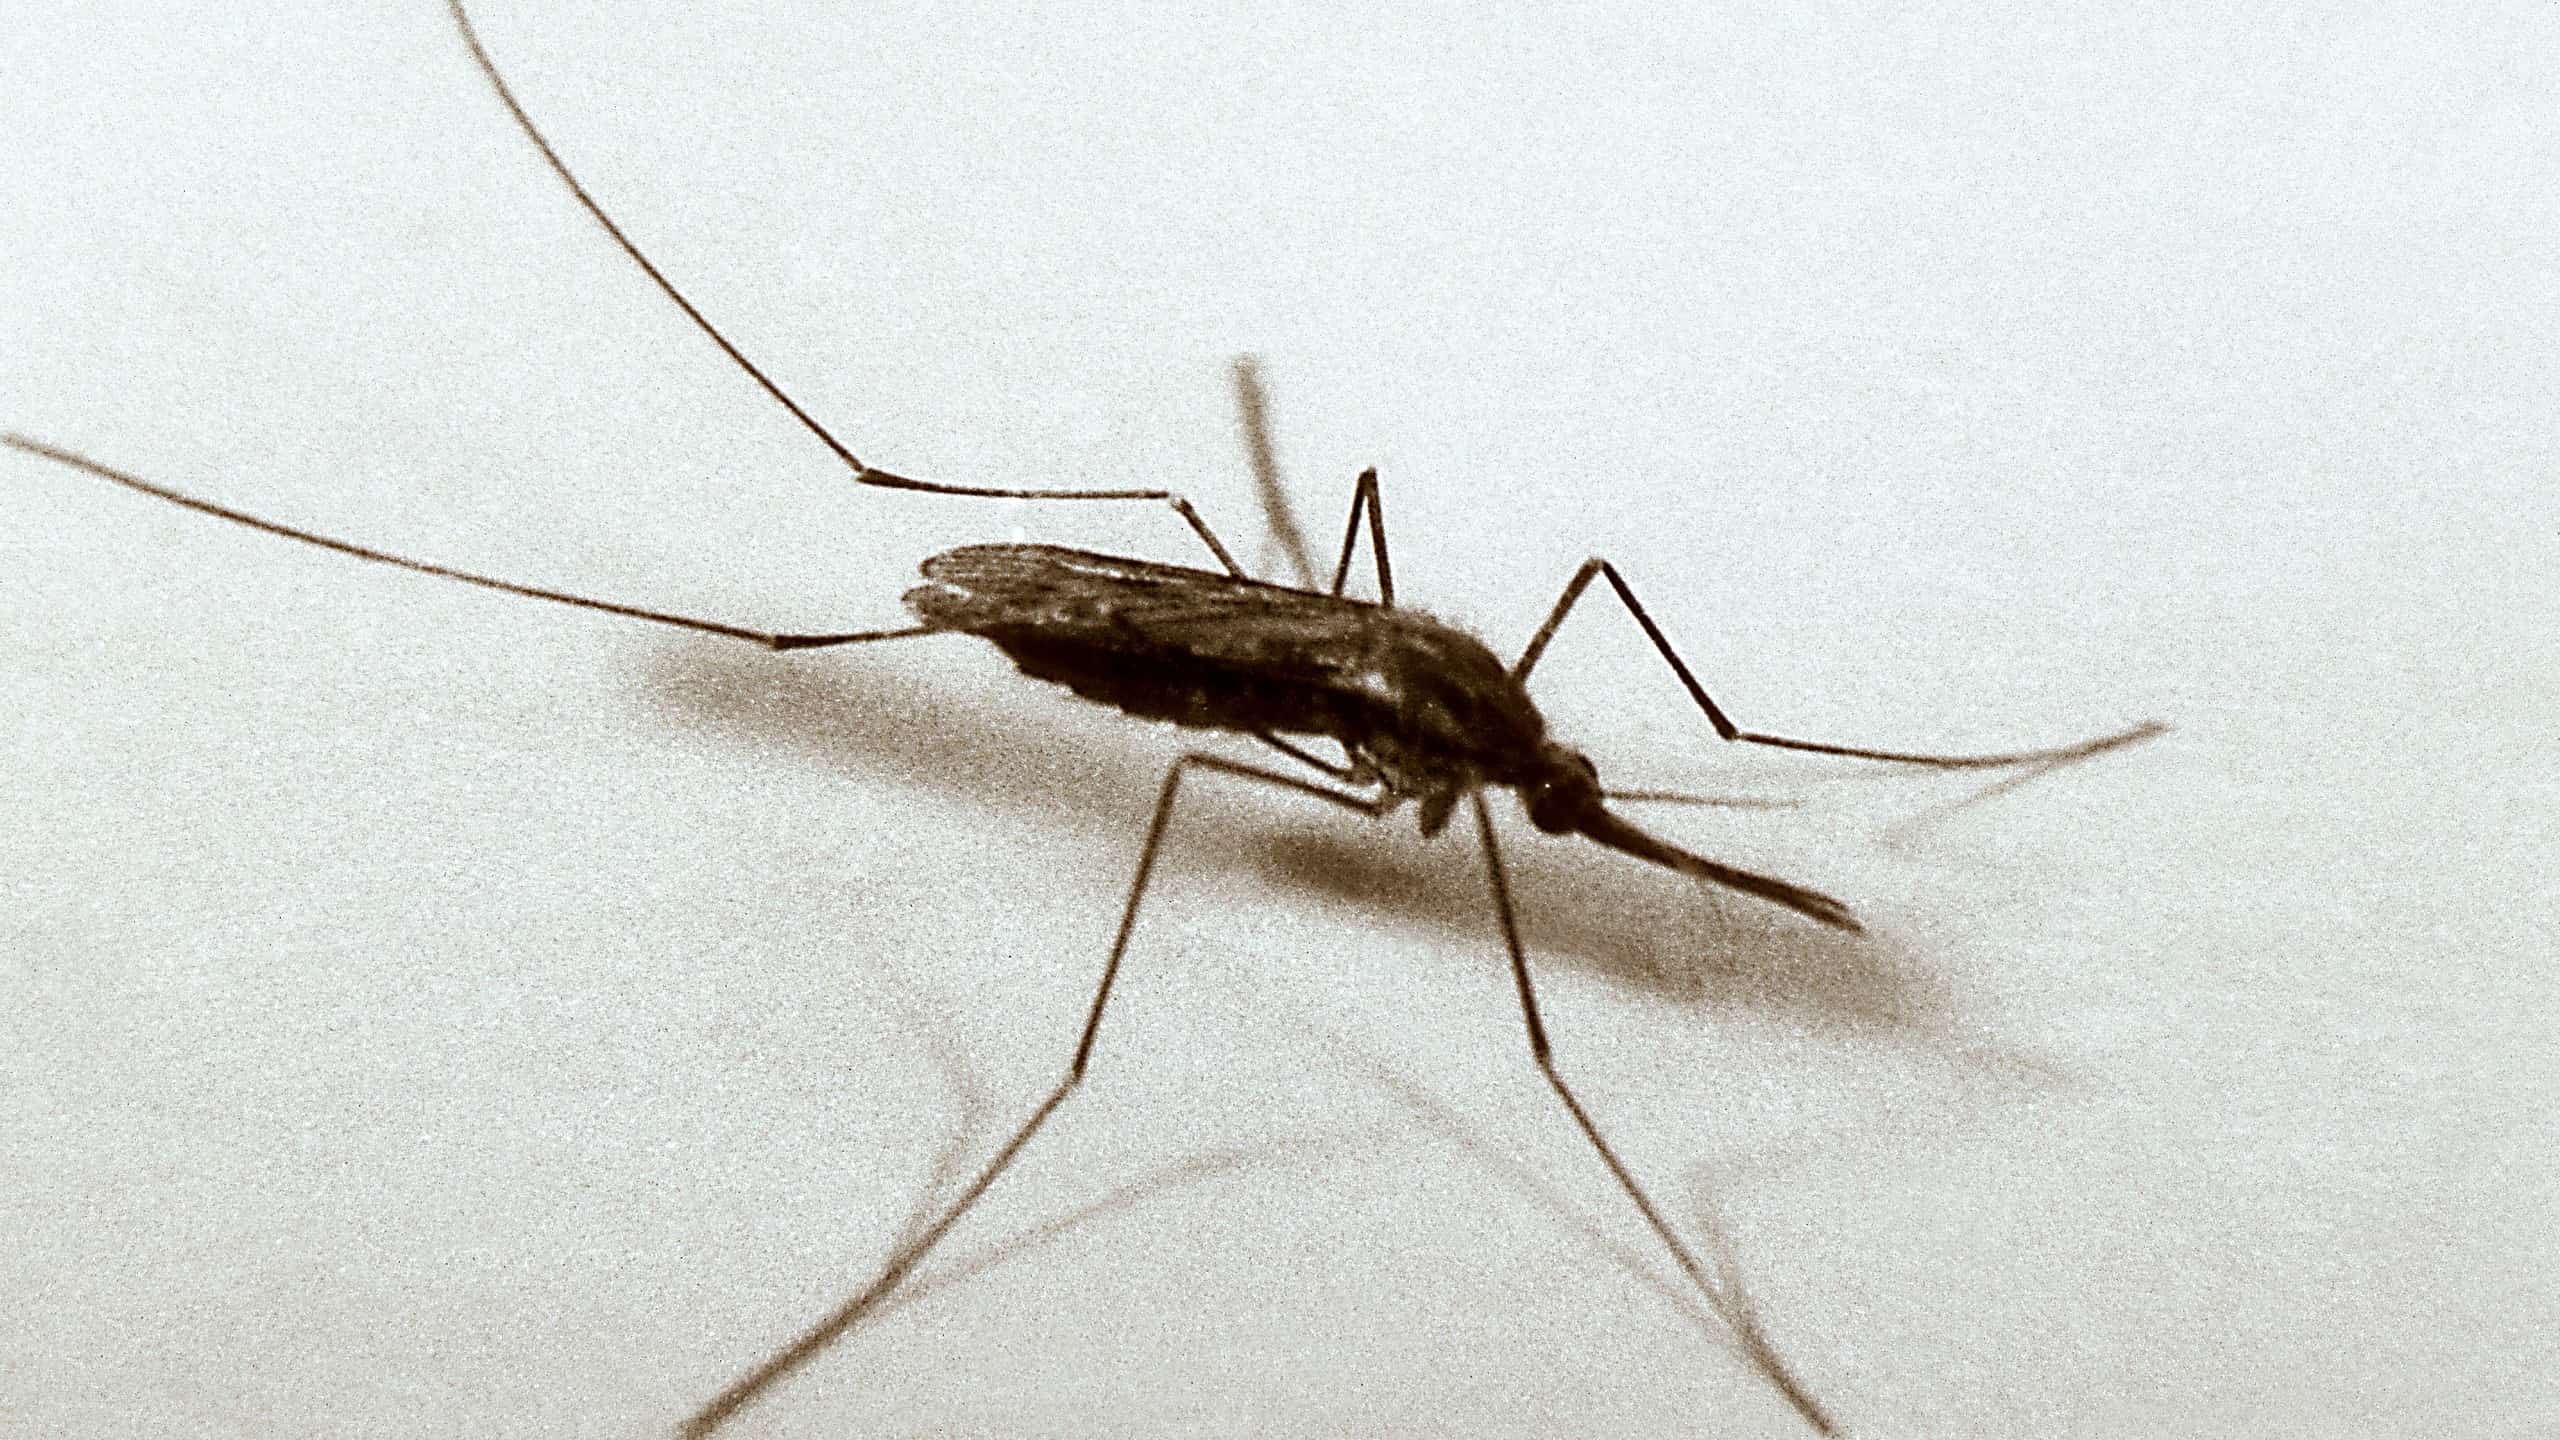 Common malaria mosquitoes